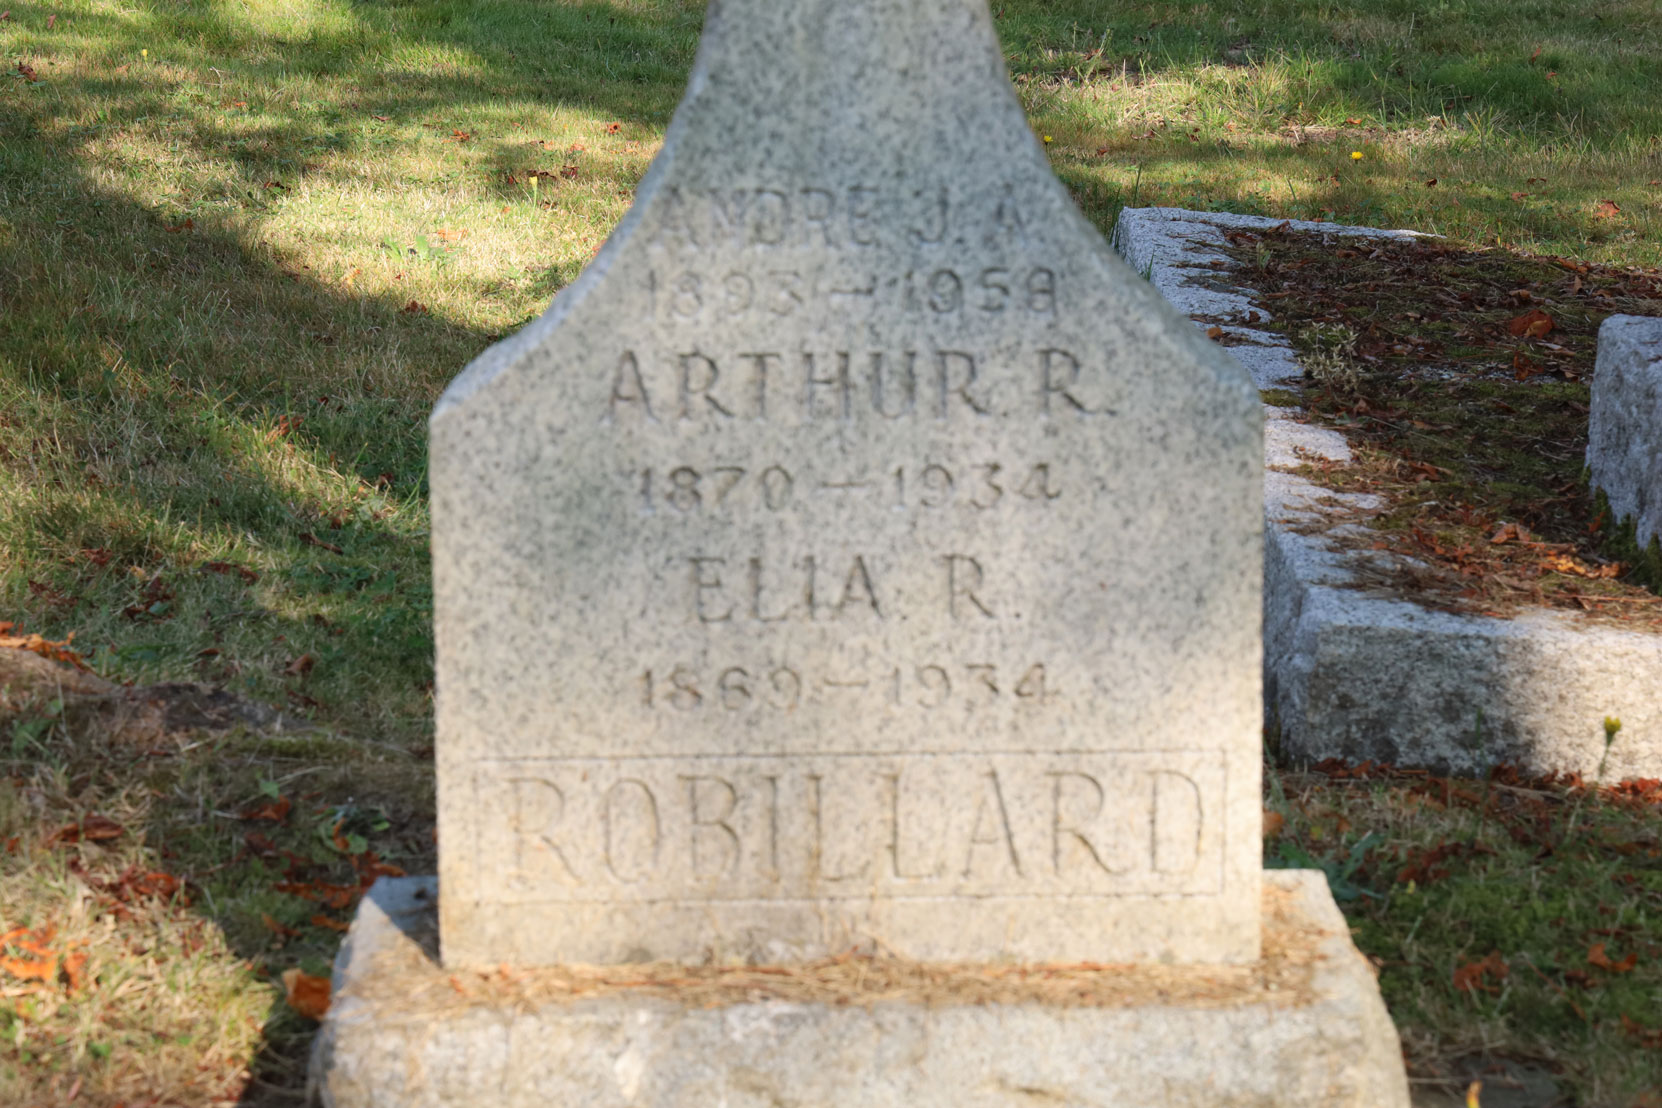 Arthur Robillard grave inscription, Ross Bay Cemetery, Victoria, BC (photo by Author)